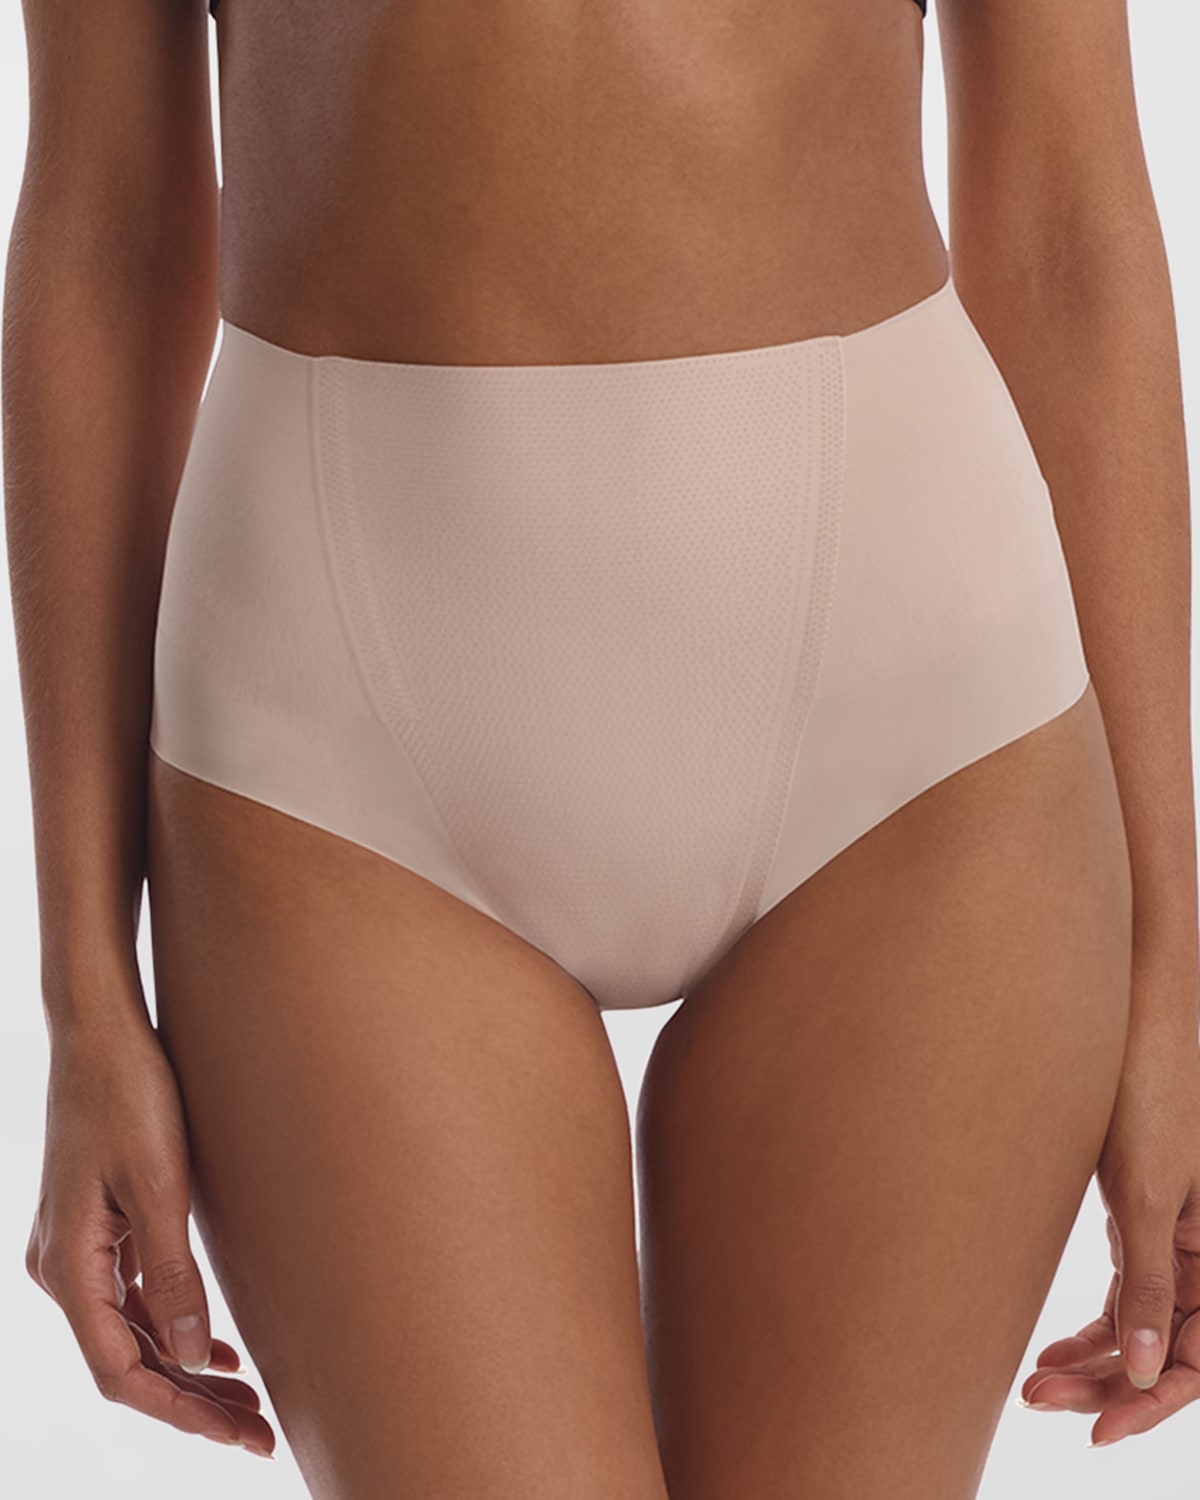 Slips Commando Underwear, Tights & Thongs at Neiman Marcus